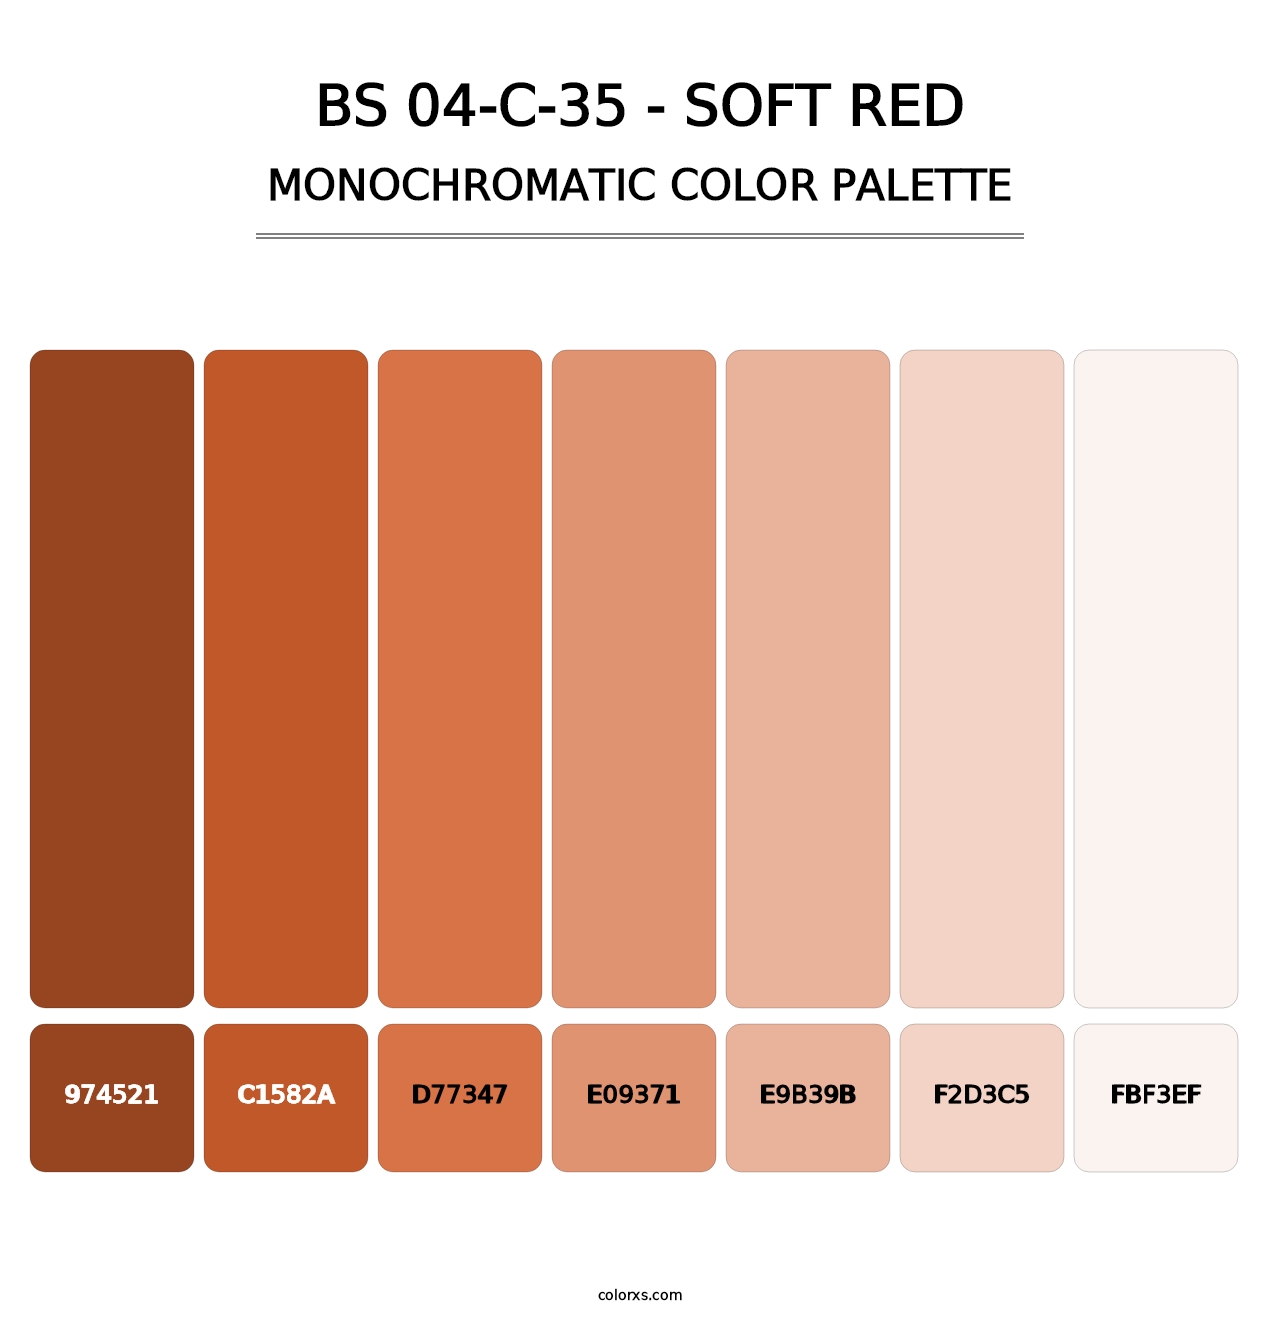 BS 04-C-35 - Soft Red - Monochromatic Color Palette